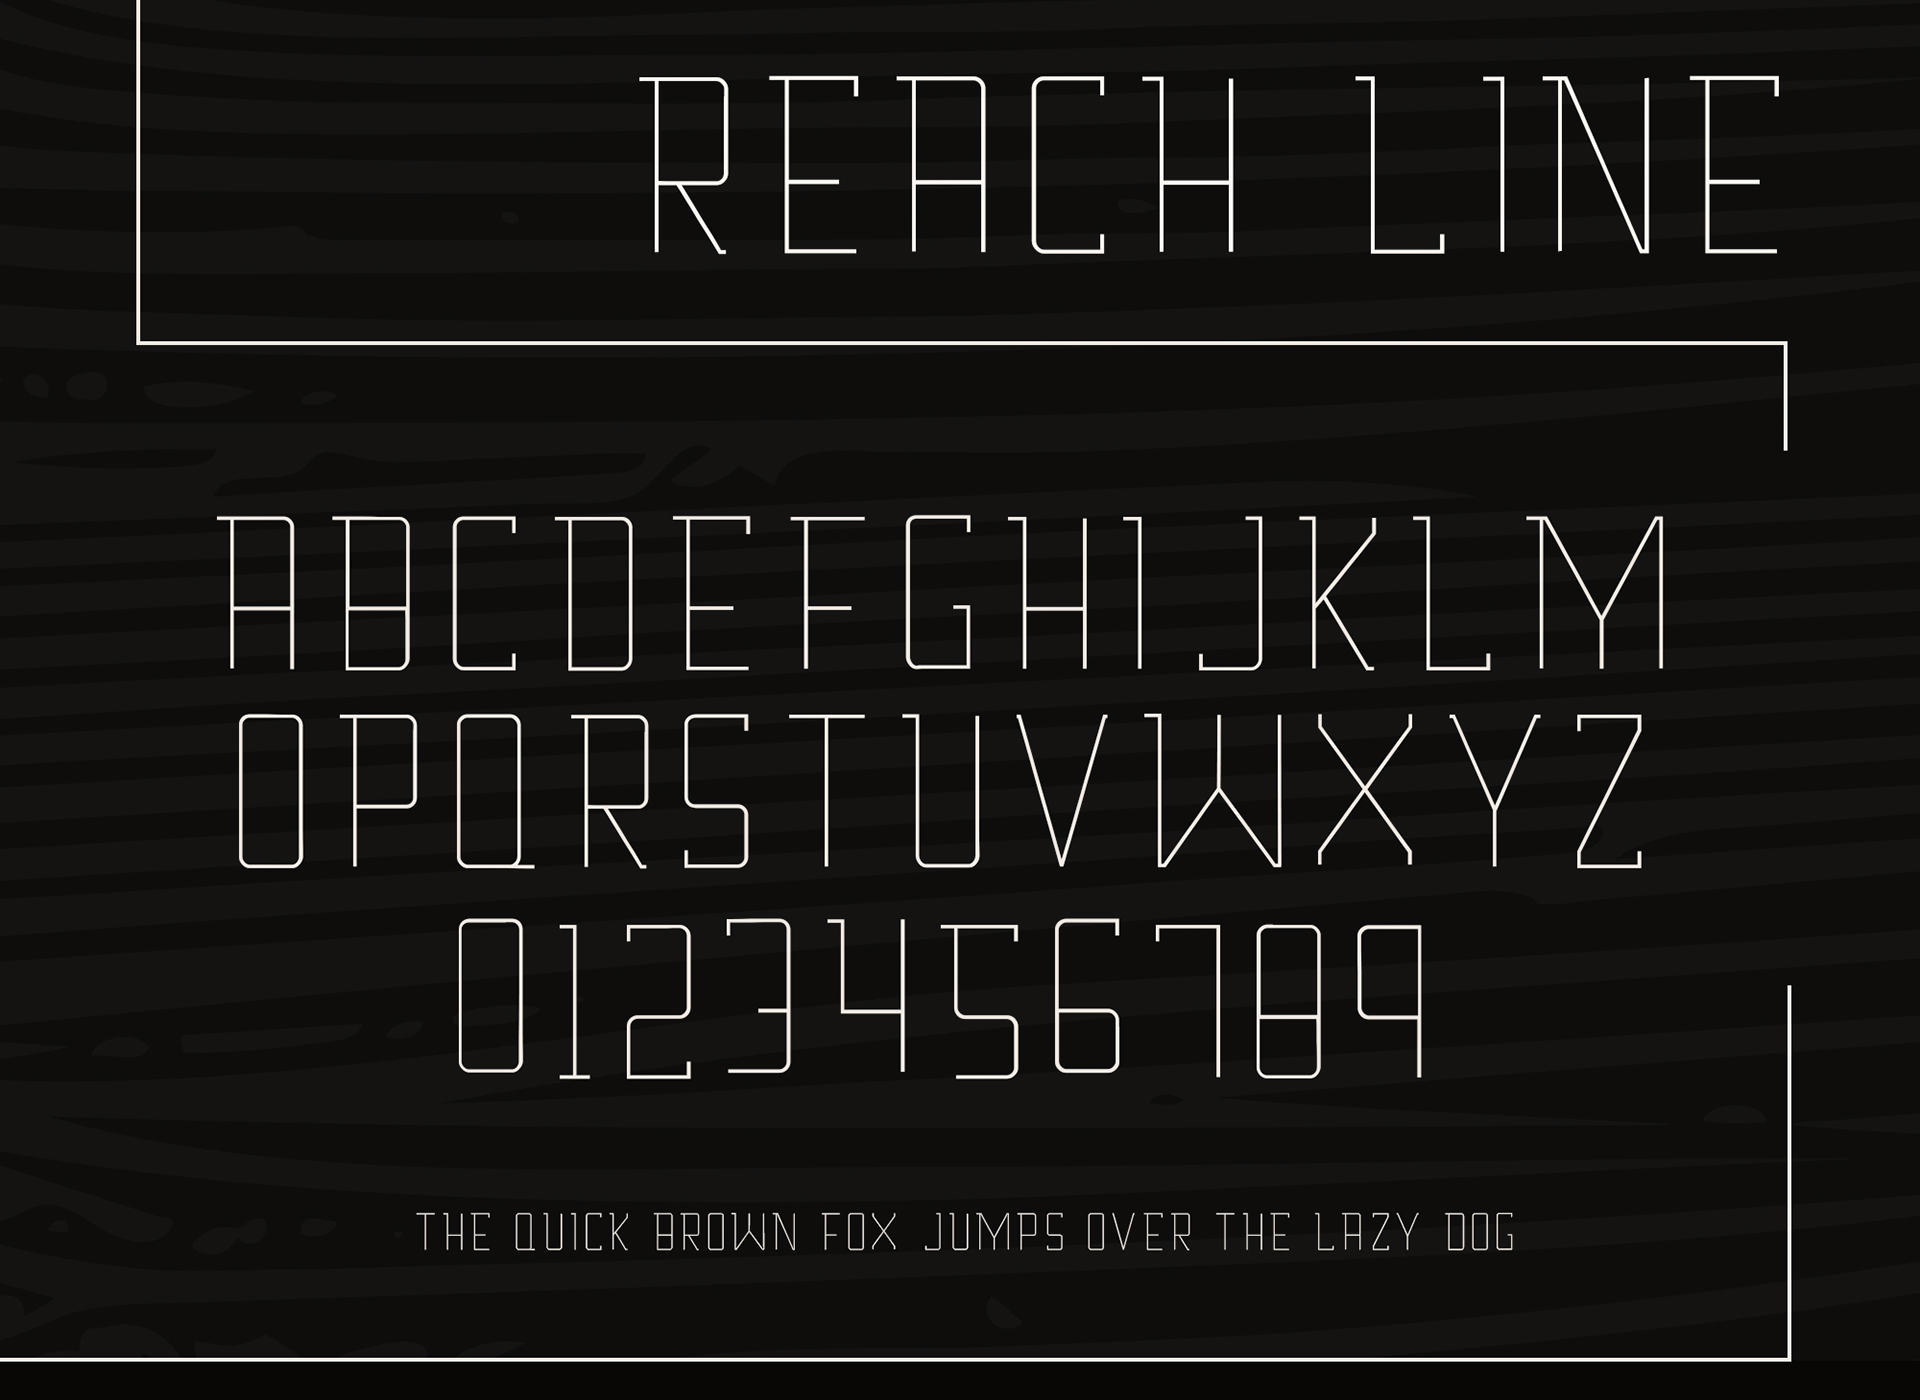 Пример шрифта Reach Fill